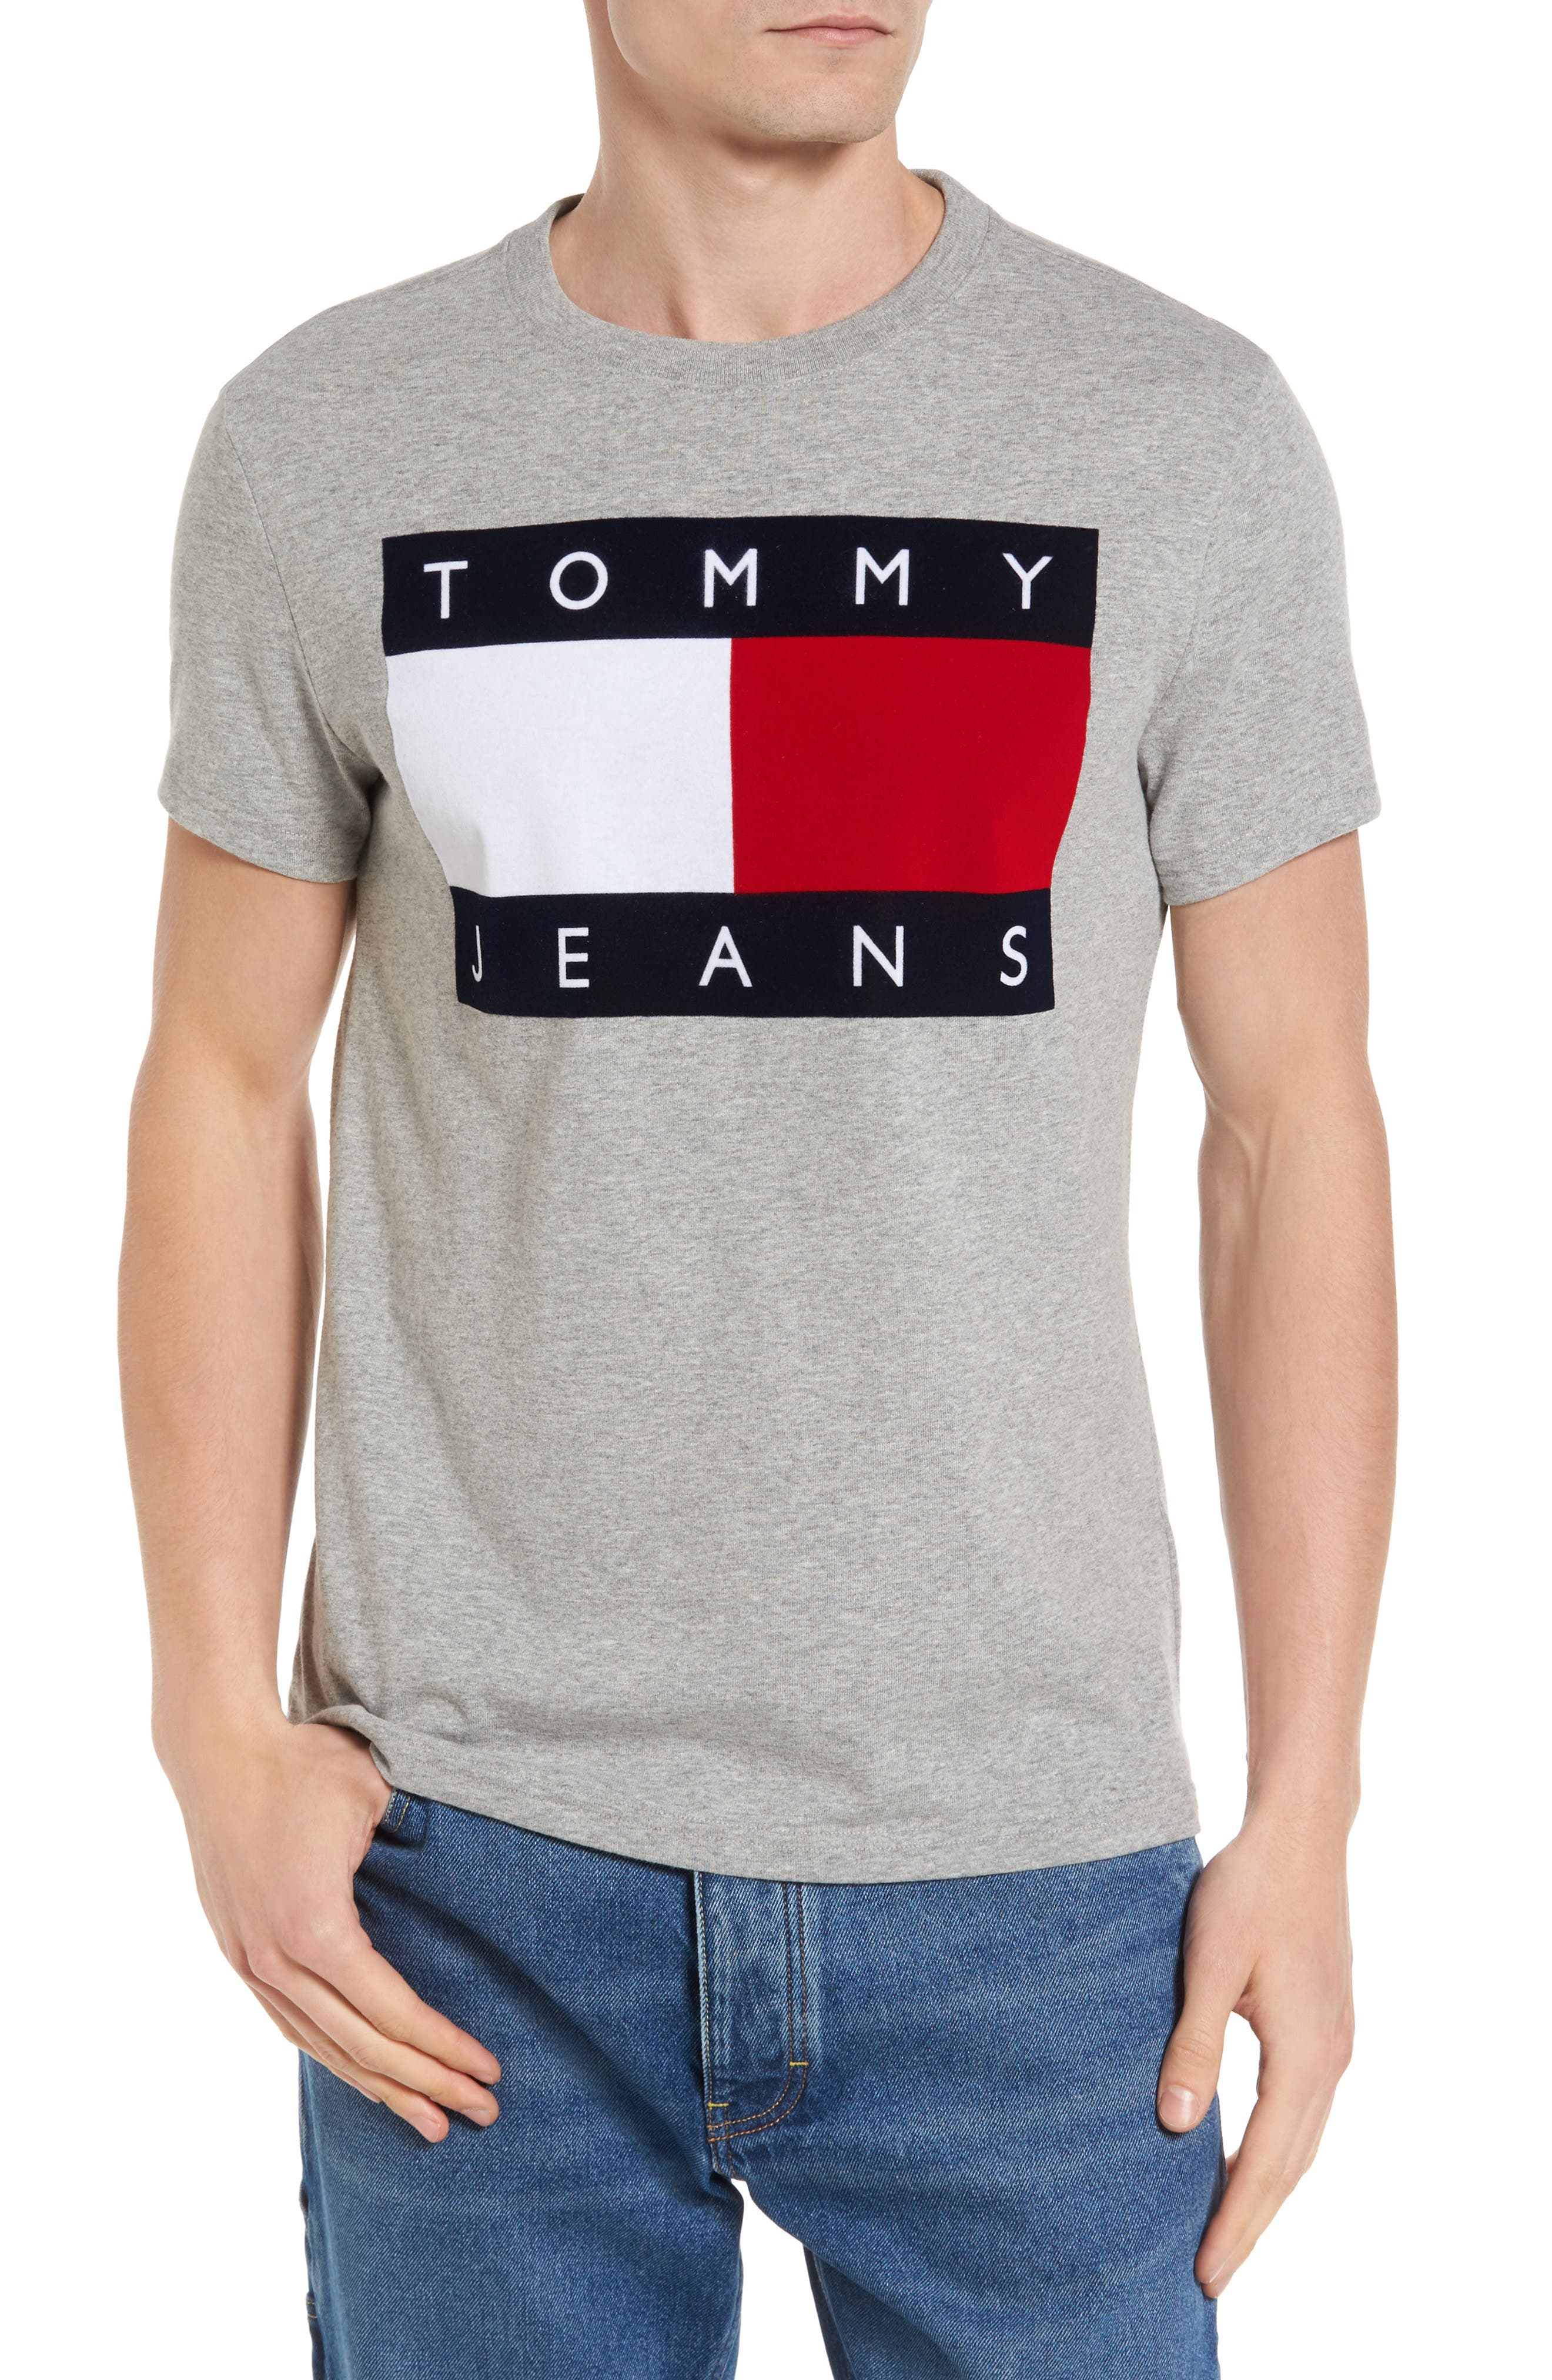 tommy hilfiger 90s t shirt